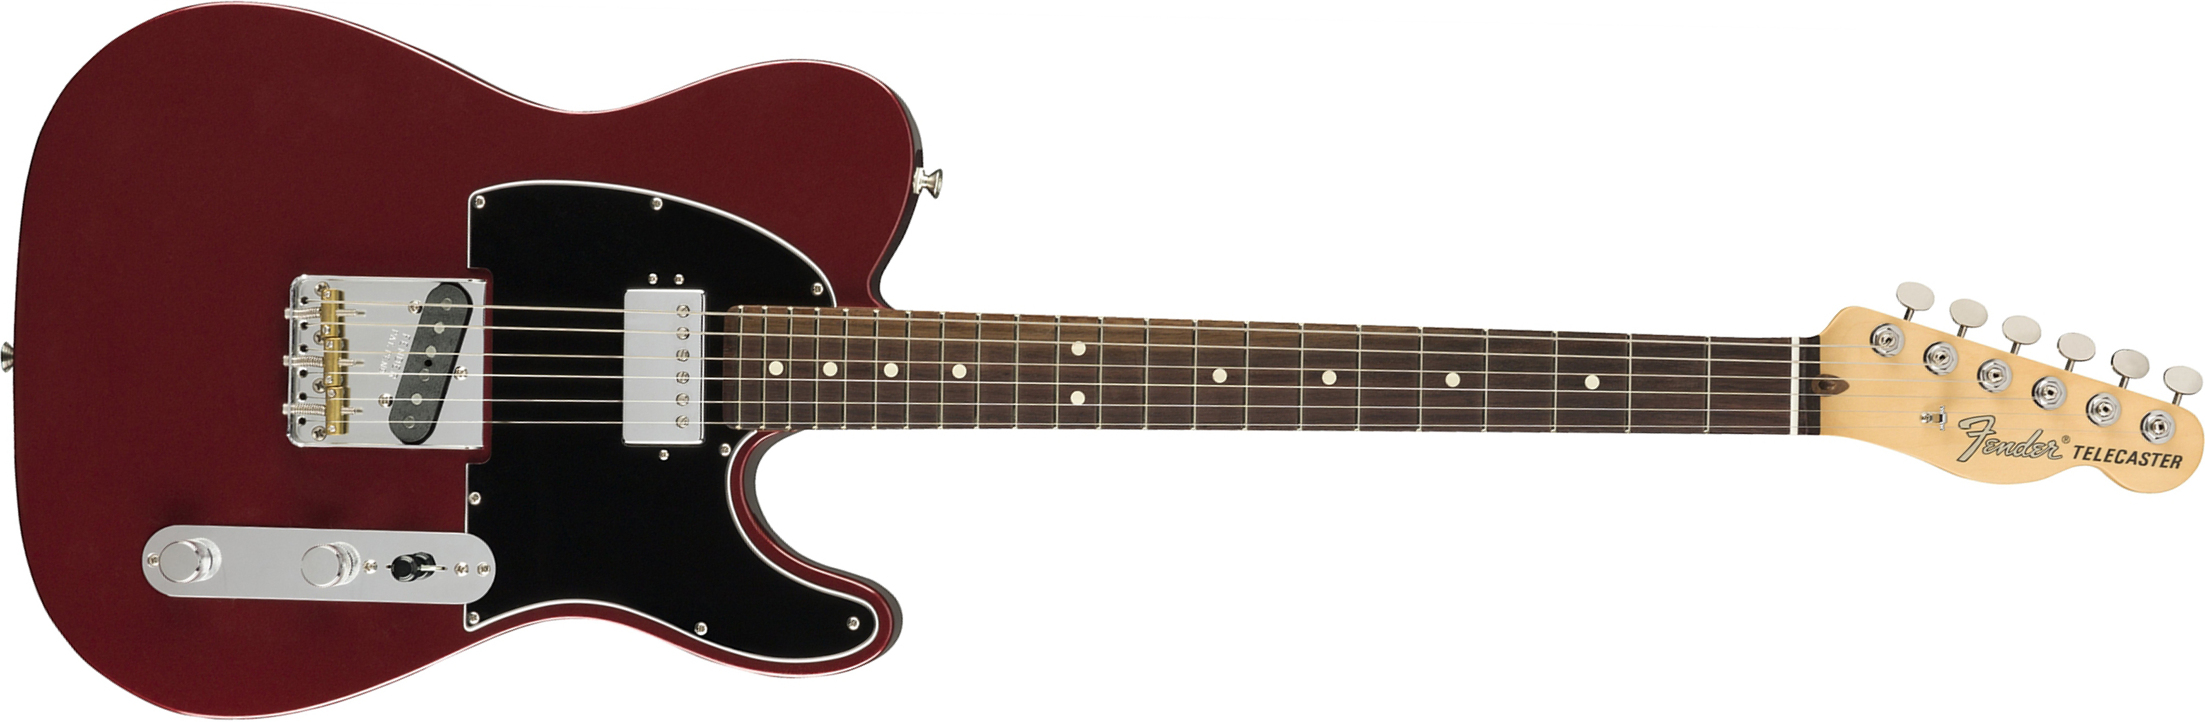 Fender Tele American Performer Hum Usa Sh Rw - Aubergine - Guitarra eléctrica con forma de tel - Main picture